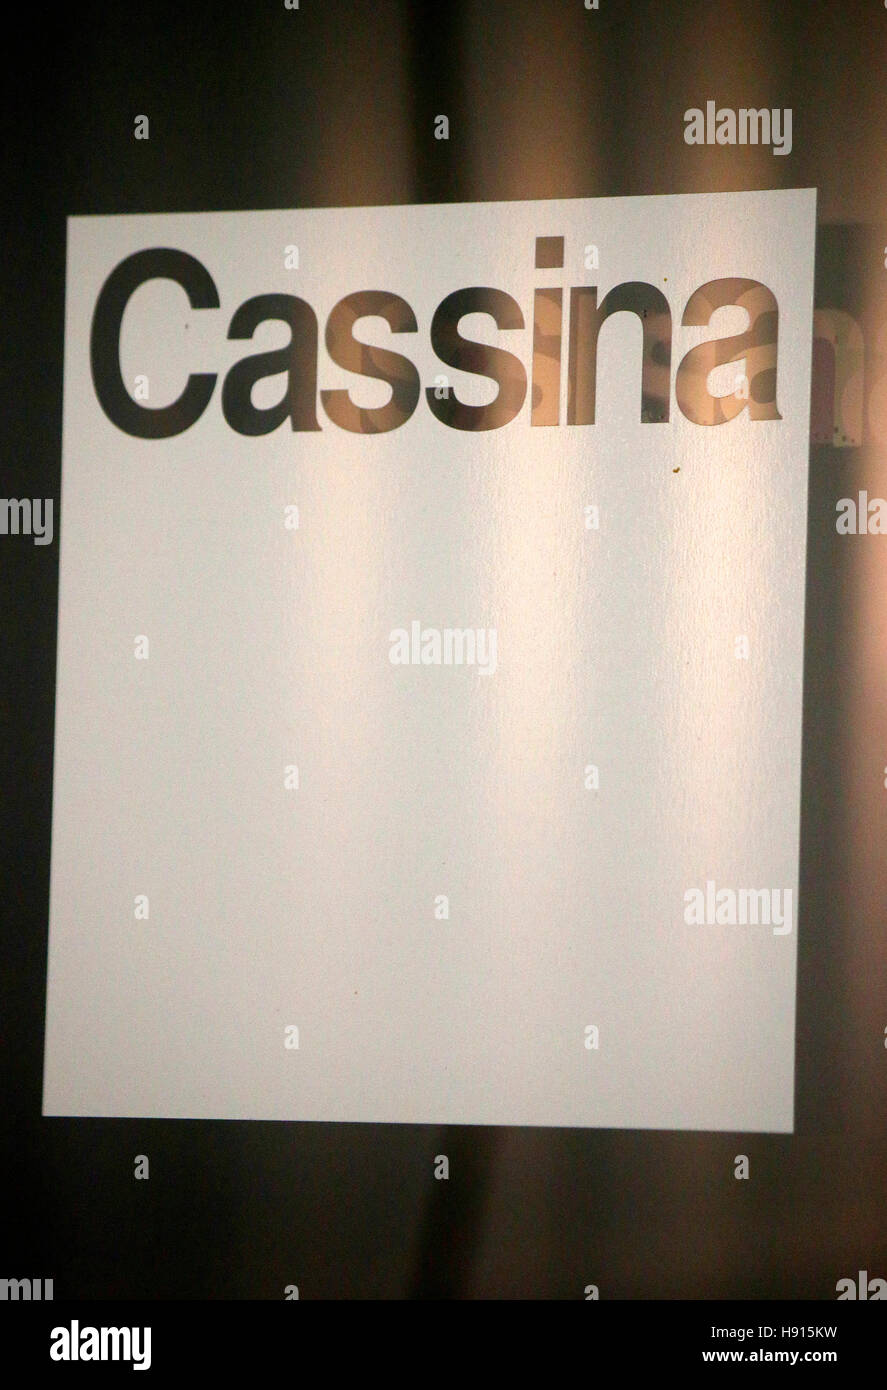 Das Logo der Marke 'Cassina', Berlino. Foto Stock